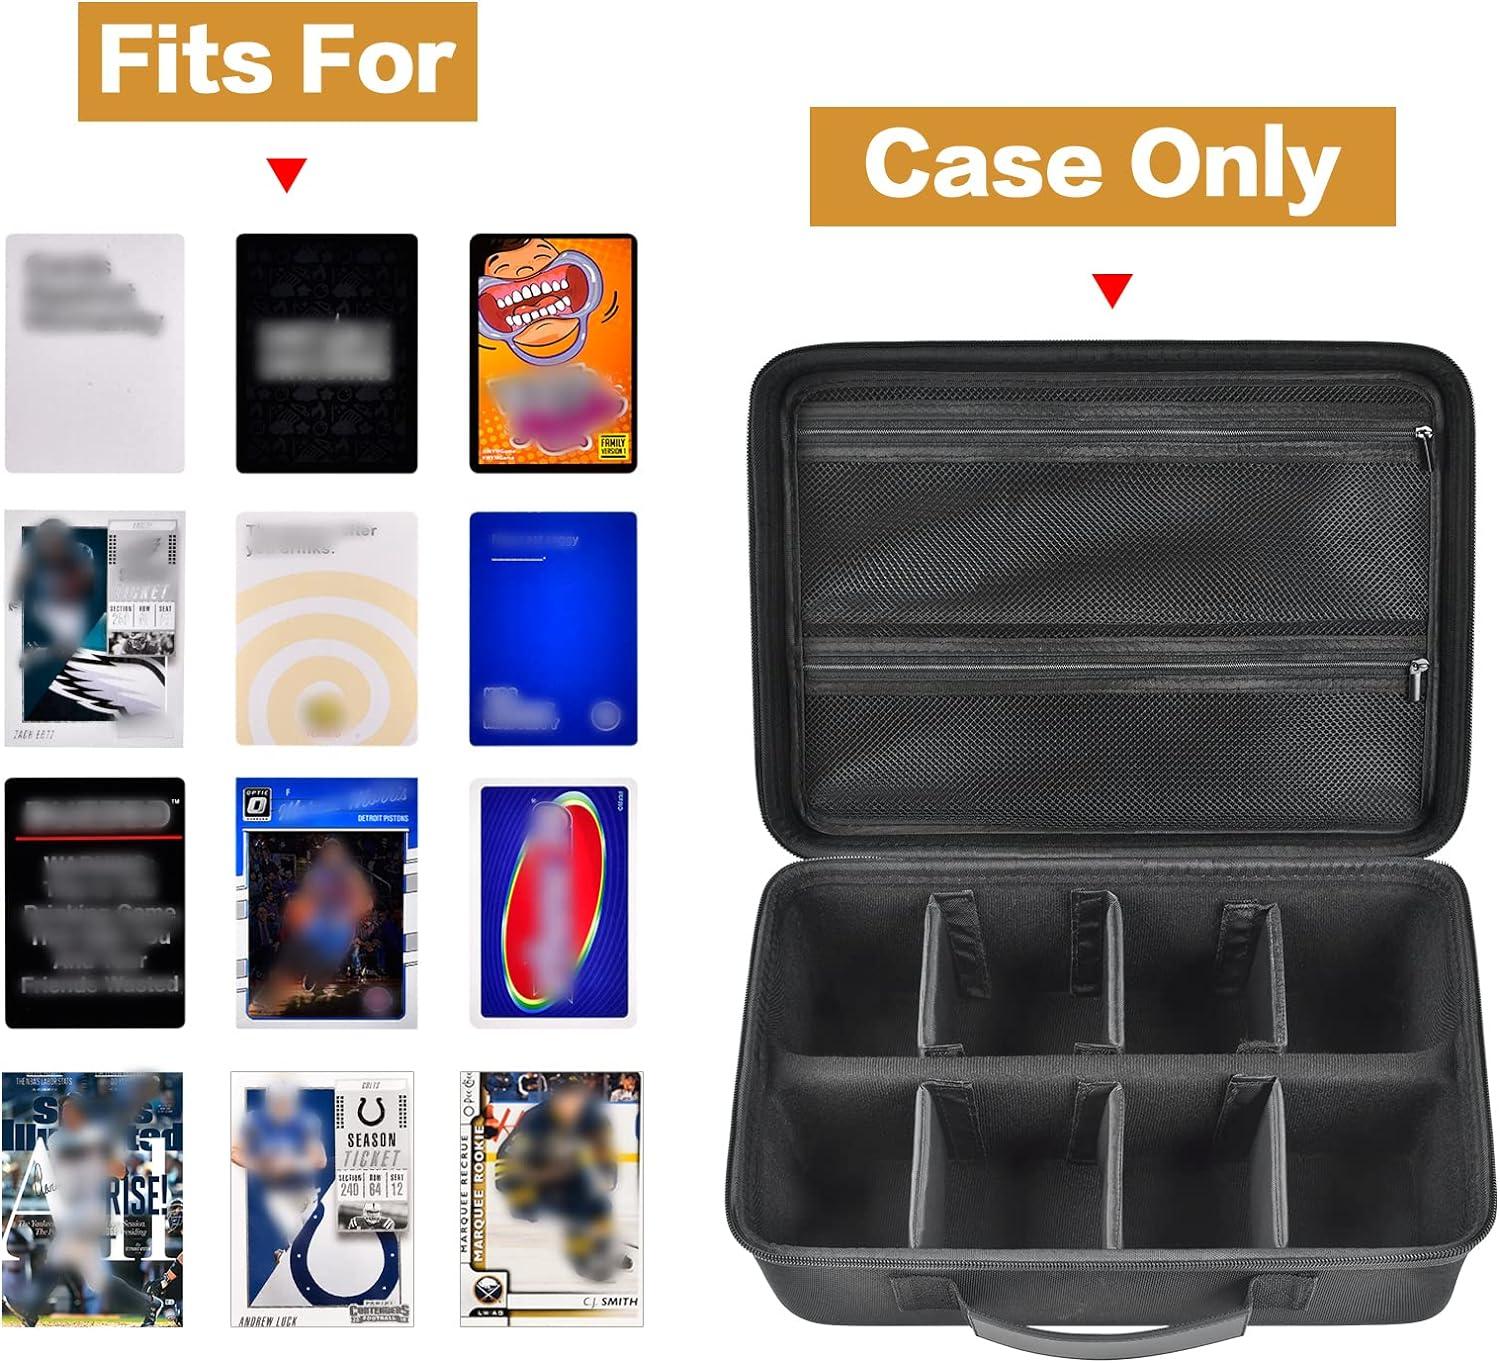 Travel Carrying Case Zipper Storage Bag Organizer for Toniebox